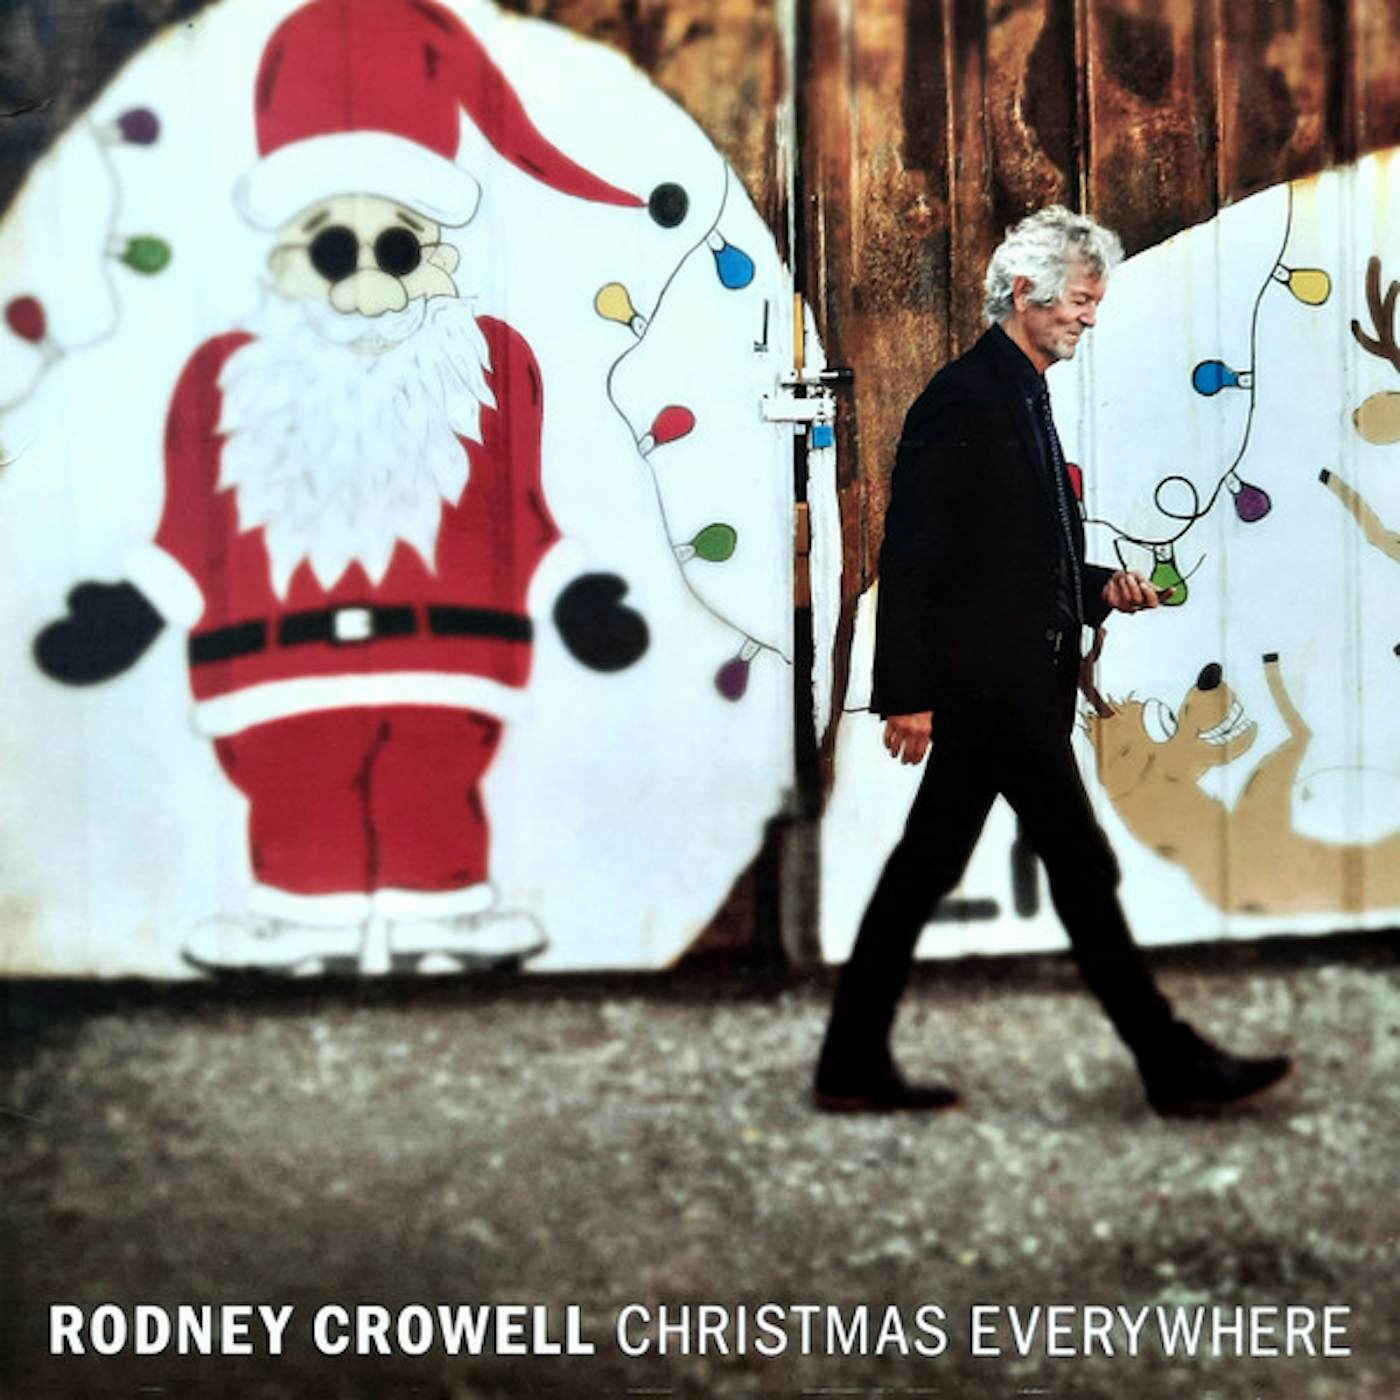 Rodney Crowell CHRISTMAS EVERYWHERE (CHRISTMAS TREE GREEN VINYL) Vinyl Record